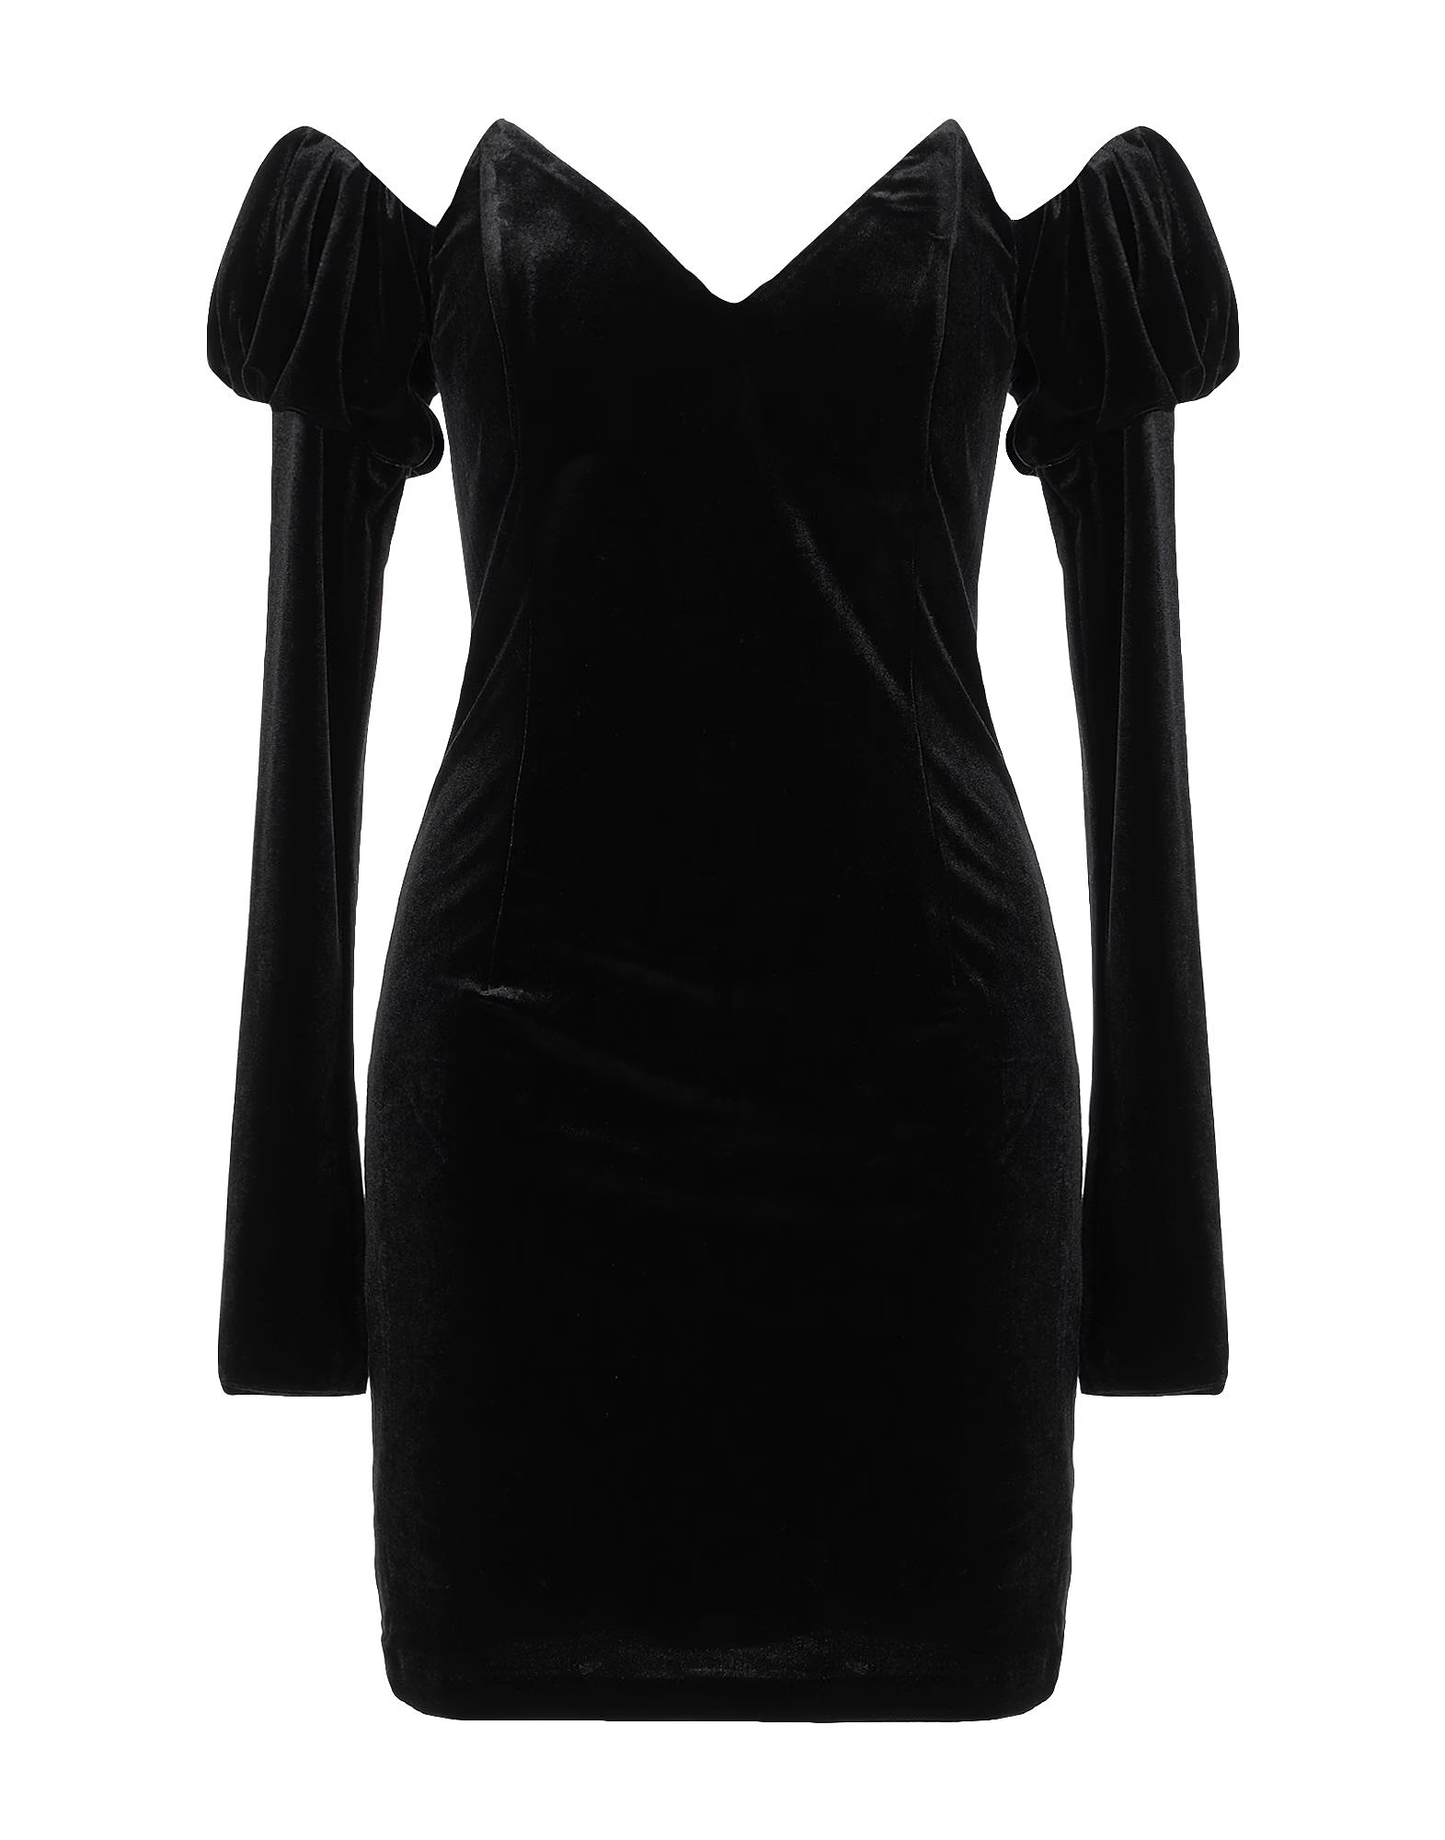 PARIOLI DRESSES - Parioli Velvet Short Long Sleeve Dress With Semi-Transparent Details - Black